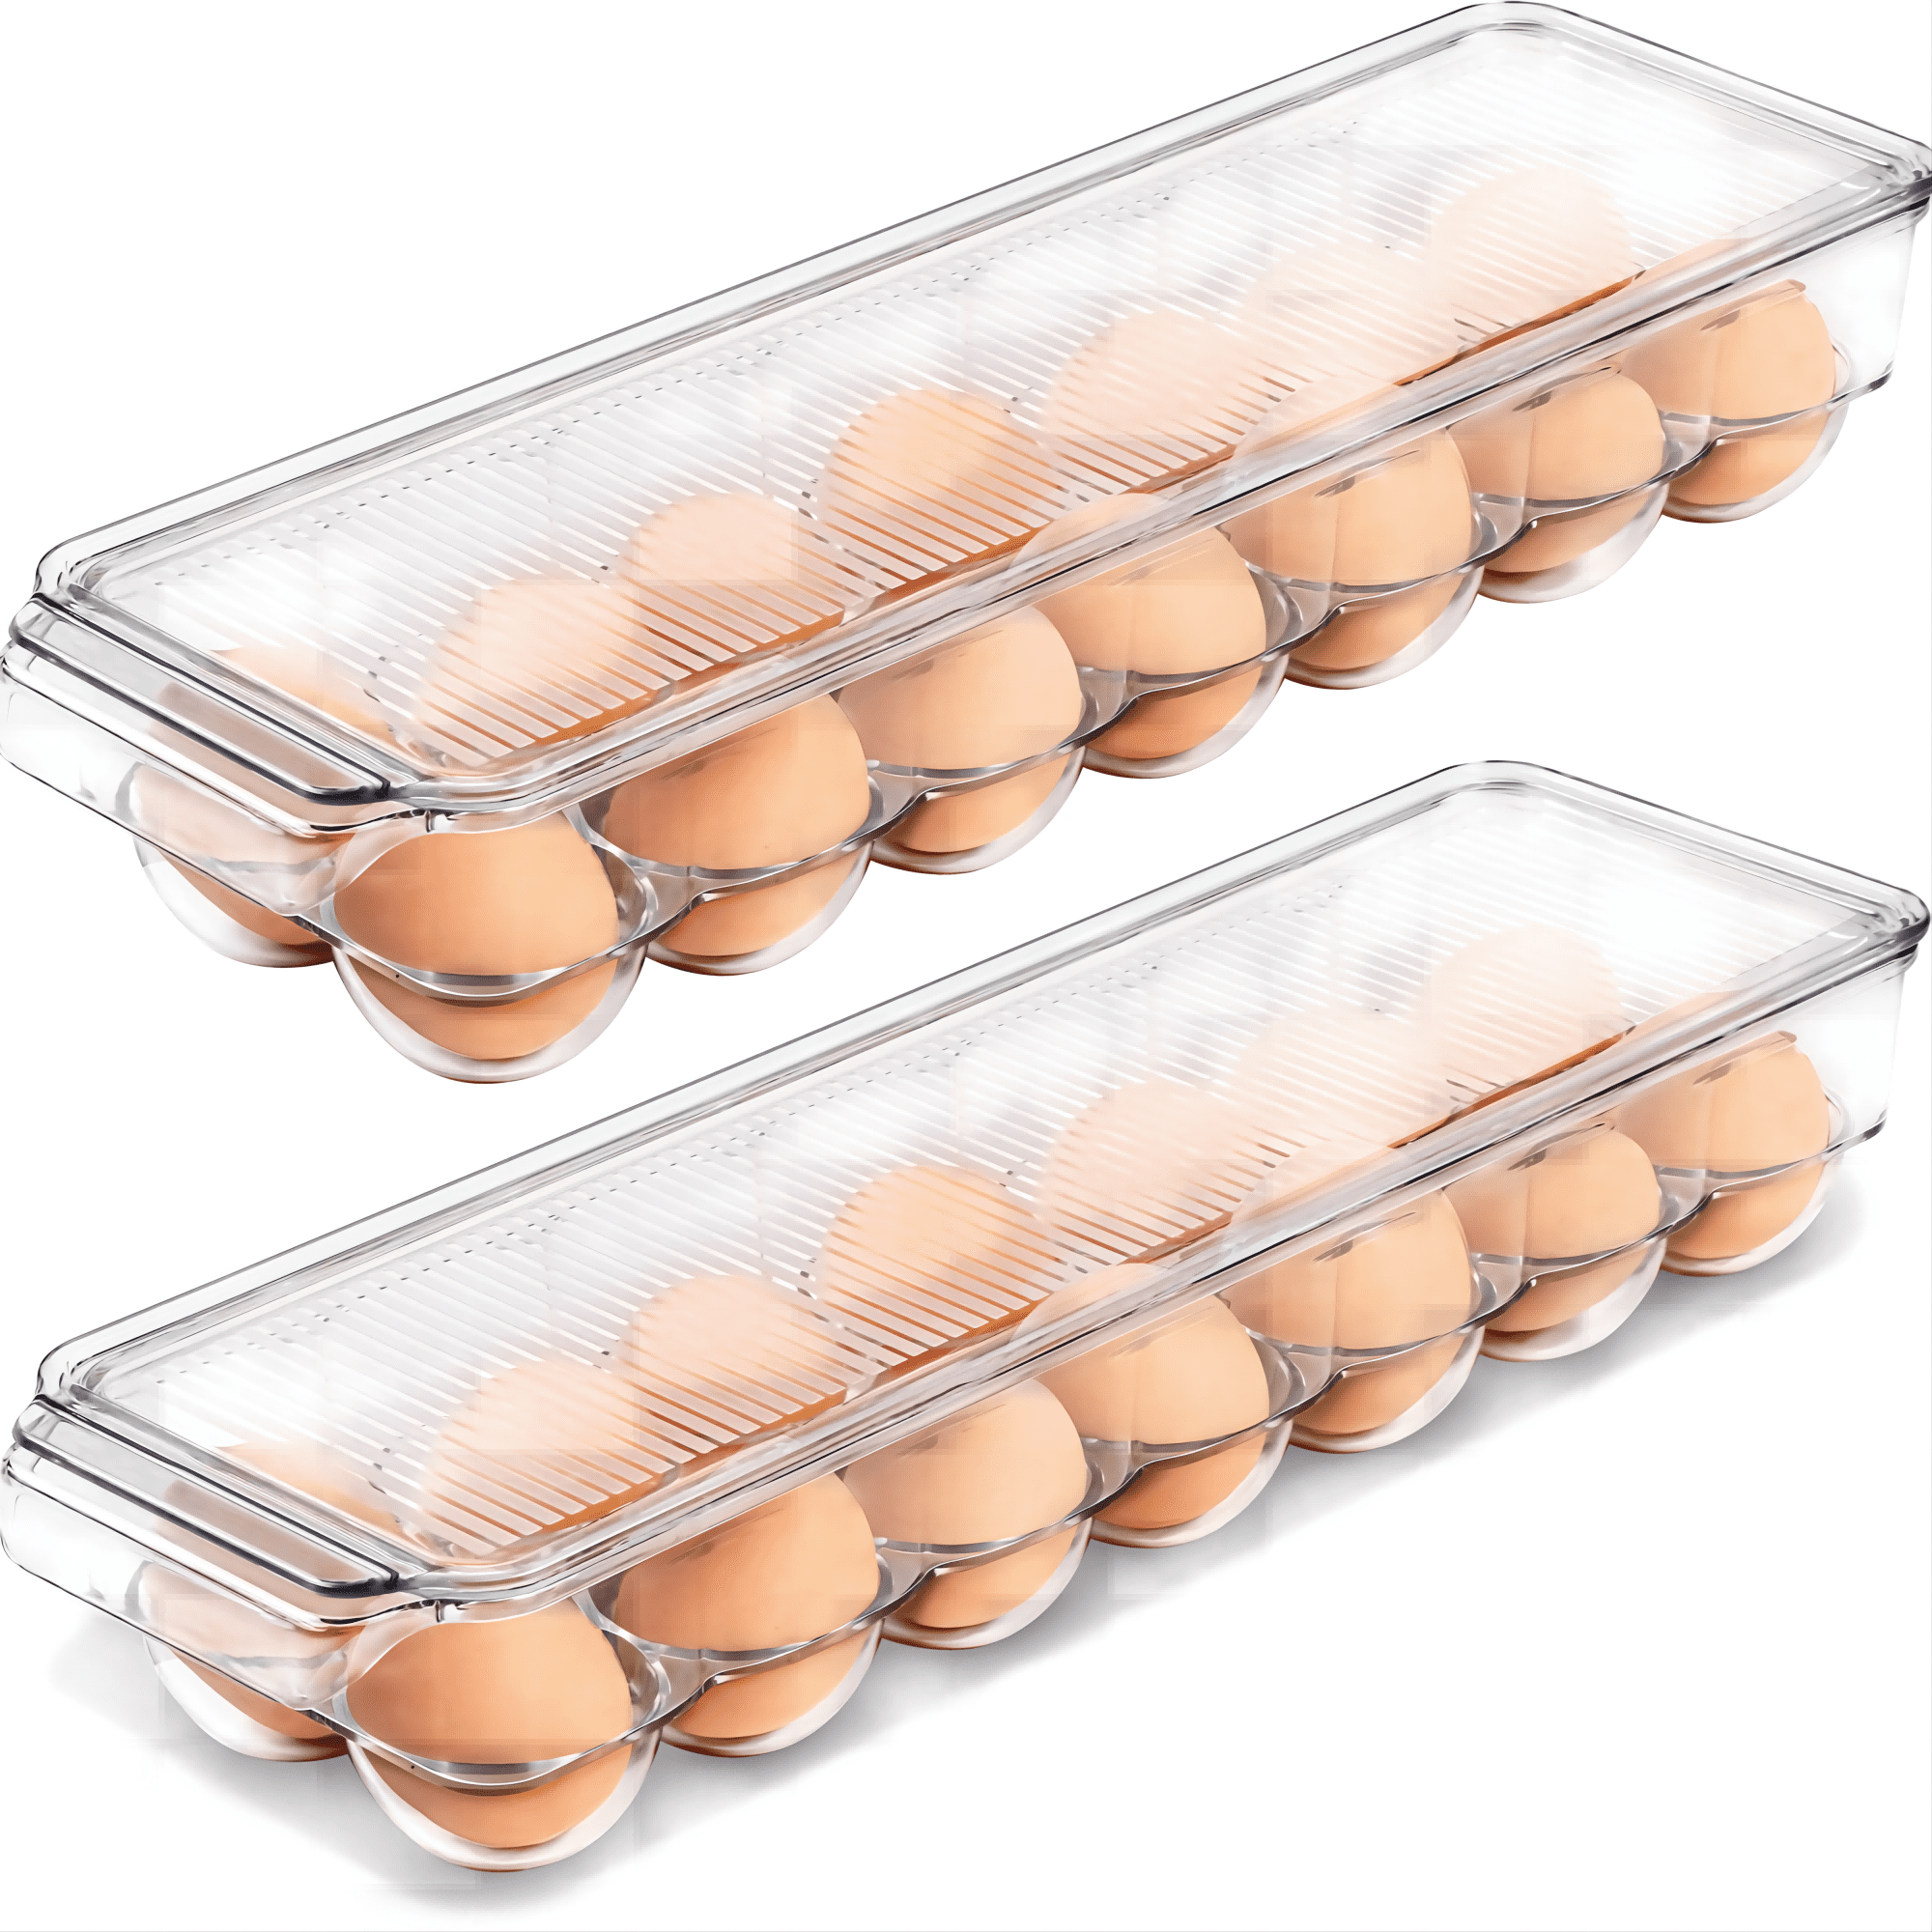 OnDisplay Stackable Acrylic Gravity Egg Tray Holder for Fridge - Food-Safe  PET Refrigerator Storage Bin for Eggs - Vandue